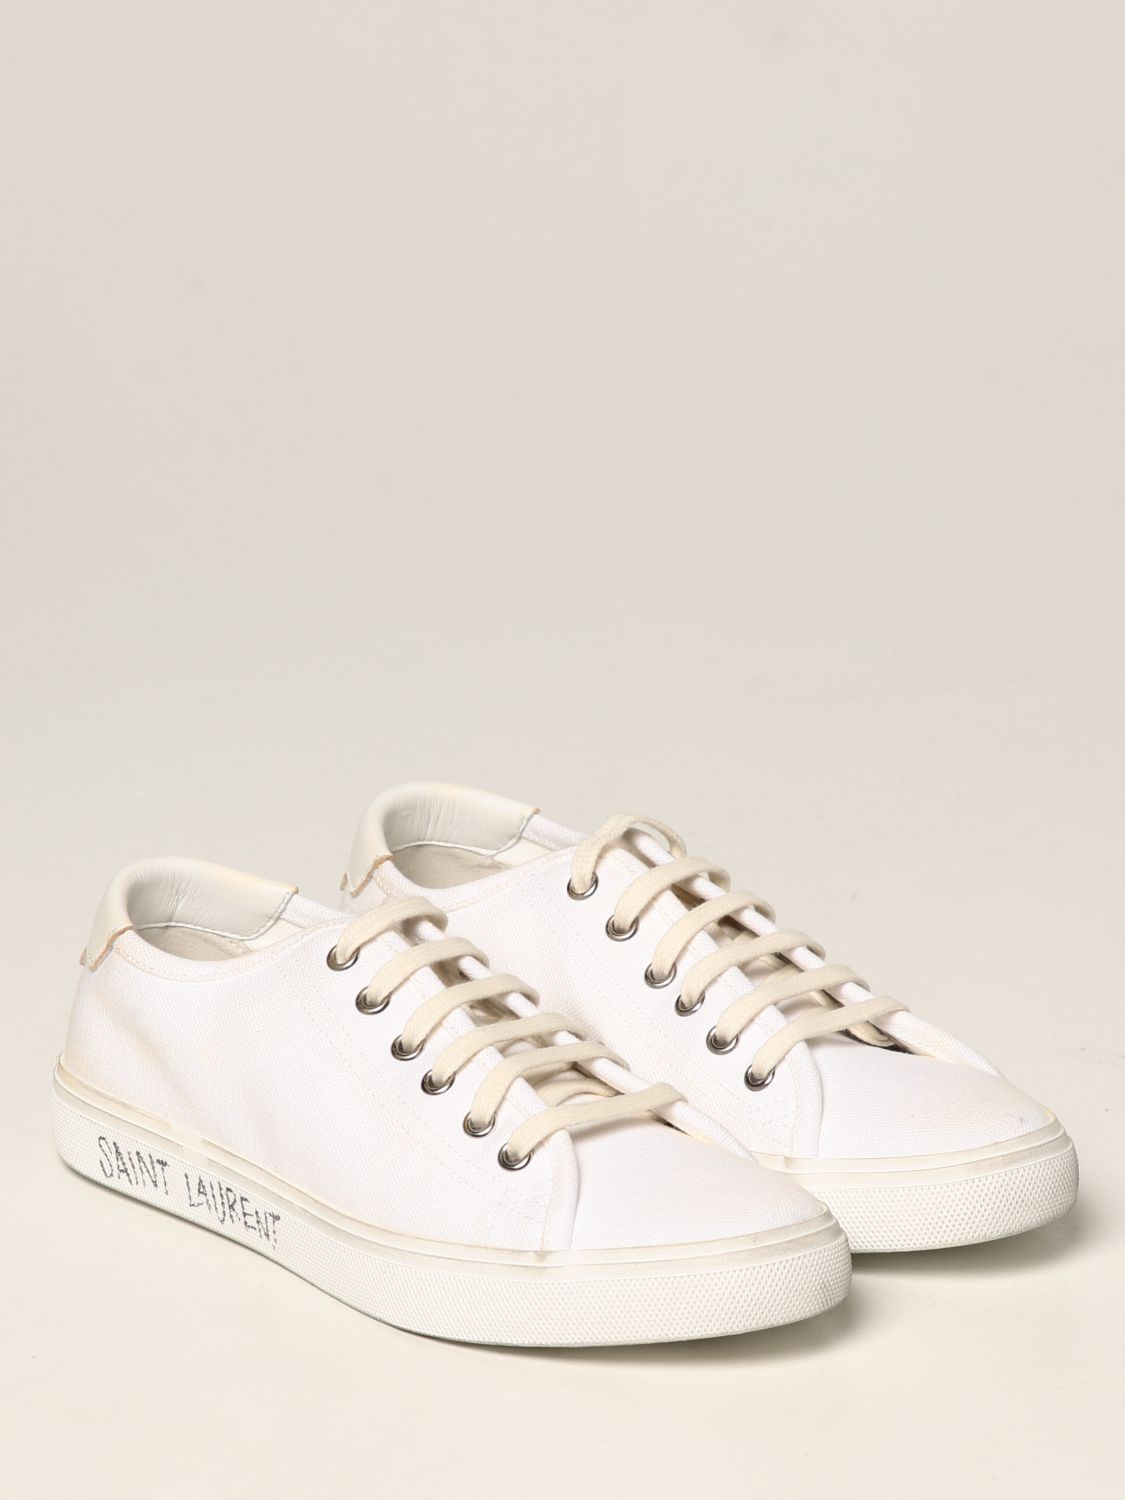 Zapatillas Saint Laurent: Zapatos mujer Saint Laurent blanco 2